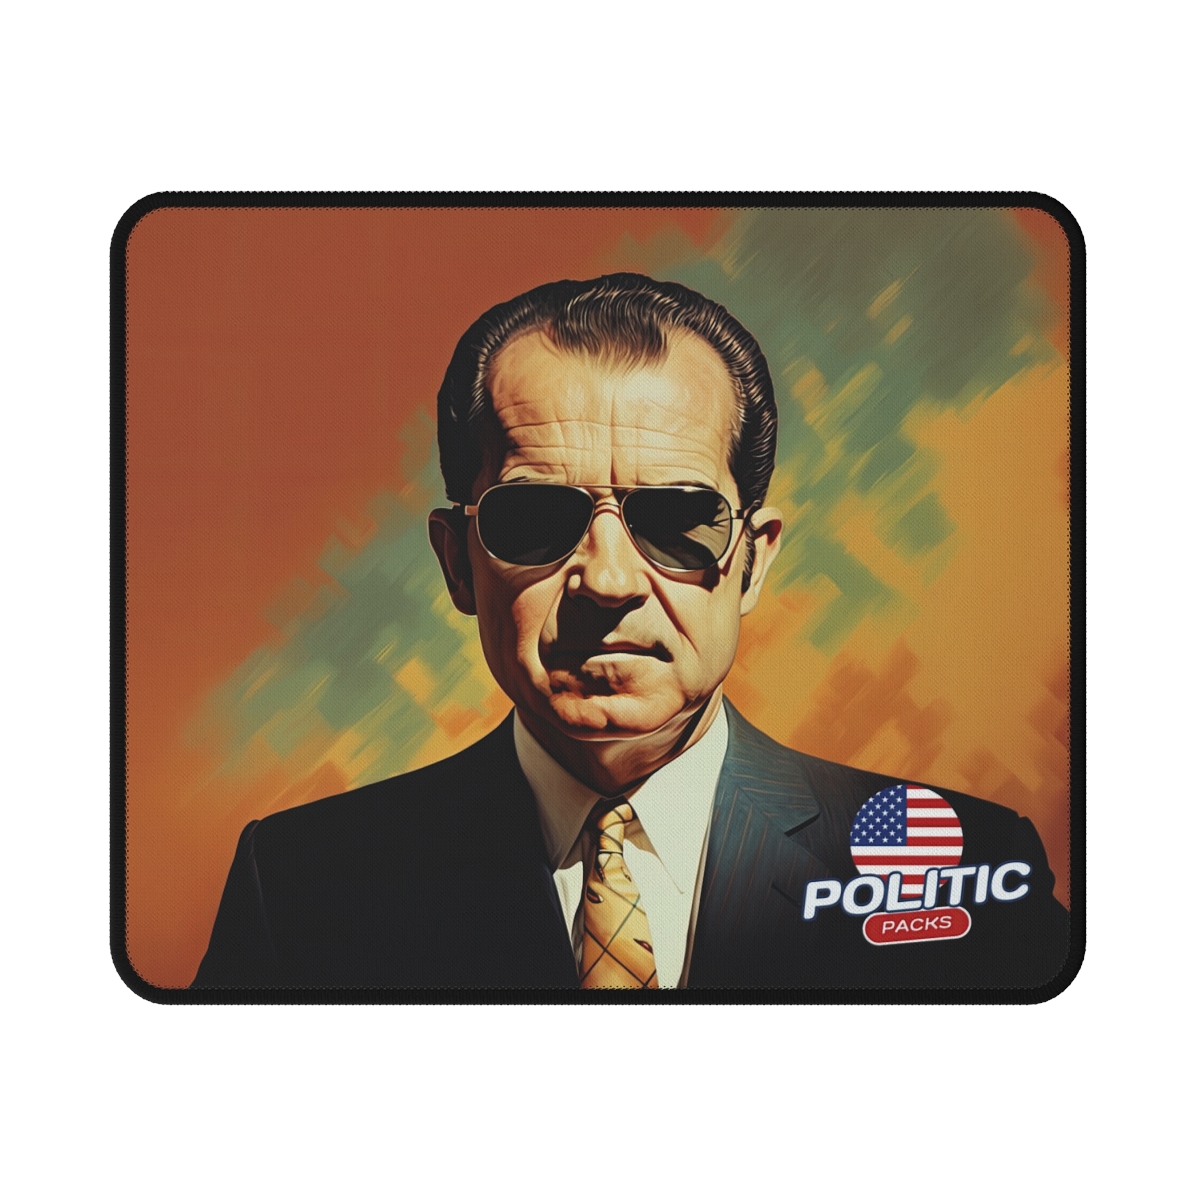 Richard Nixon Legacy Mouse Pad – Politic Packs Edition